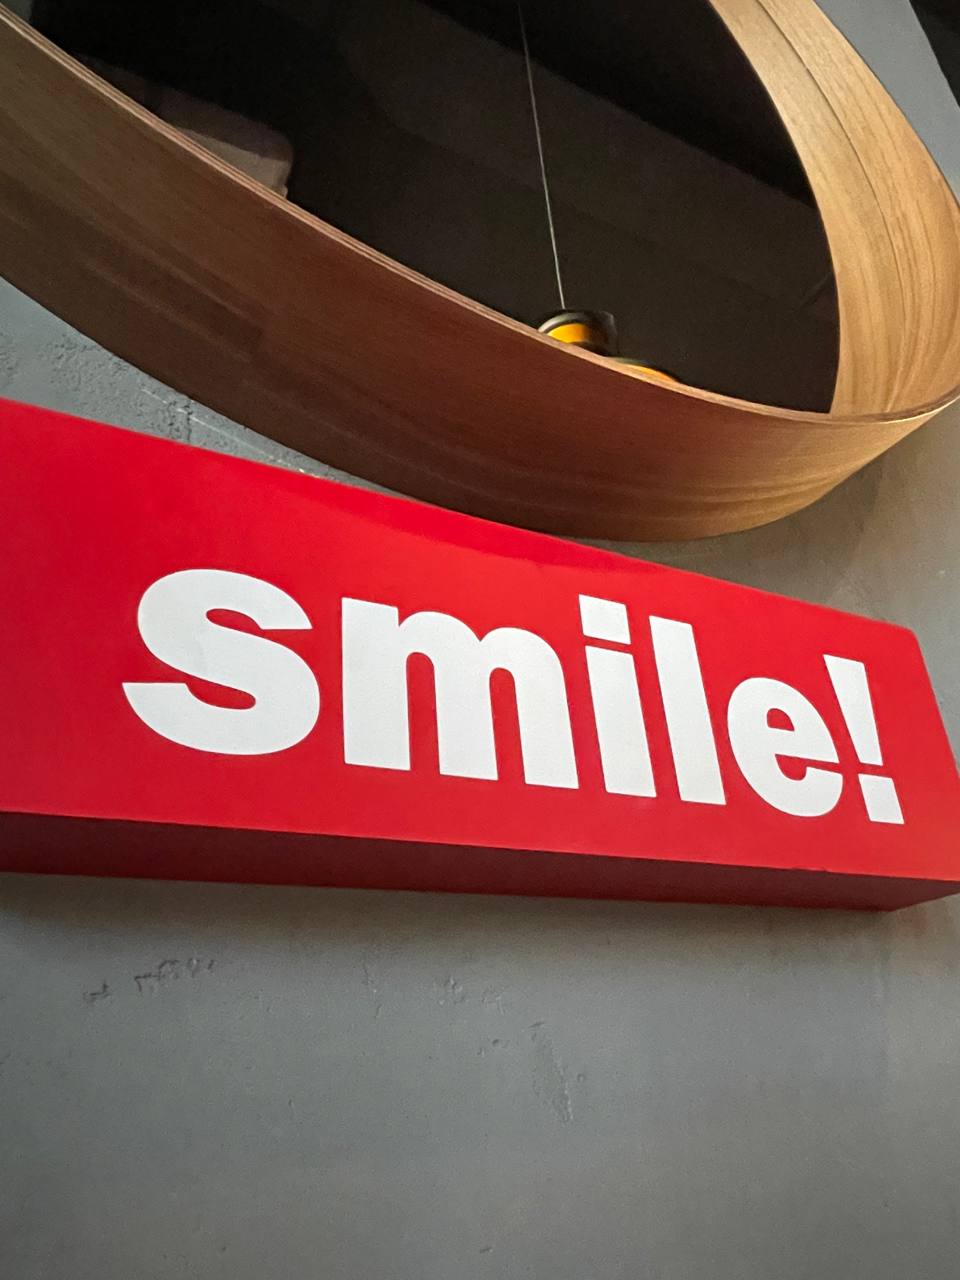 smile! smile! smile! by Artques